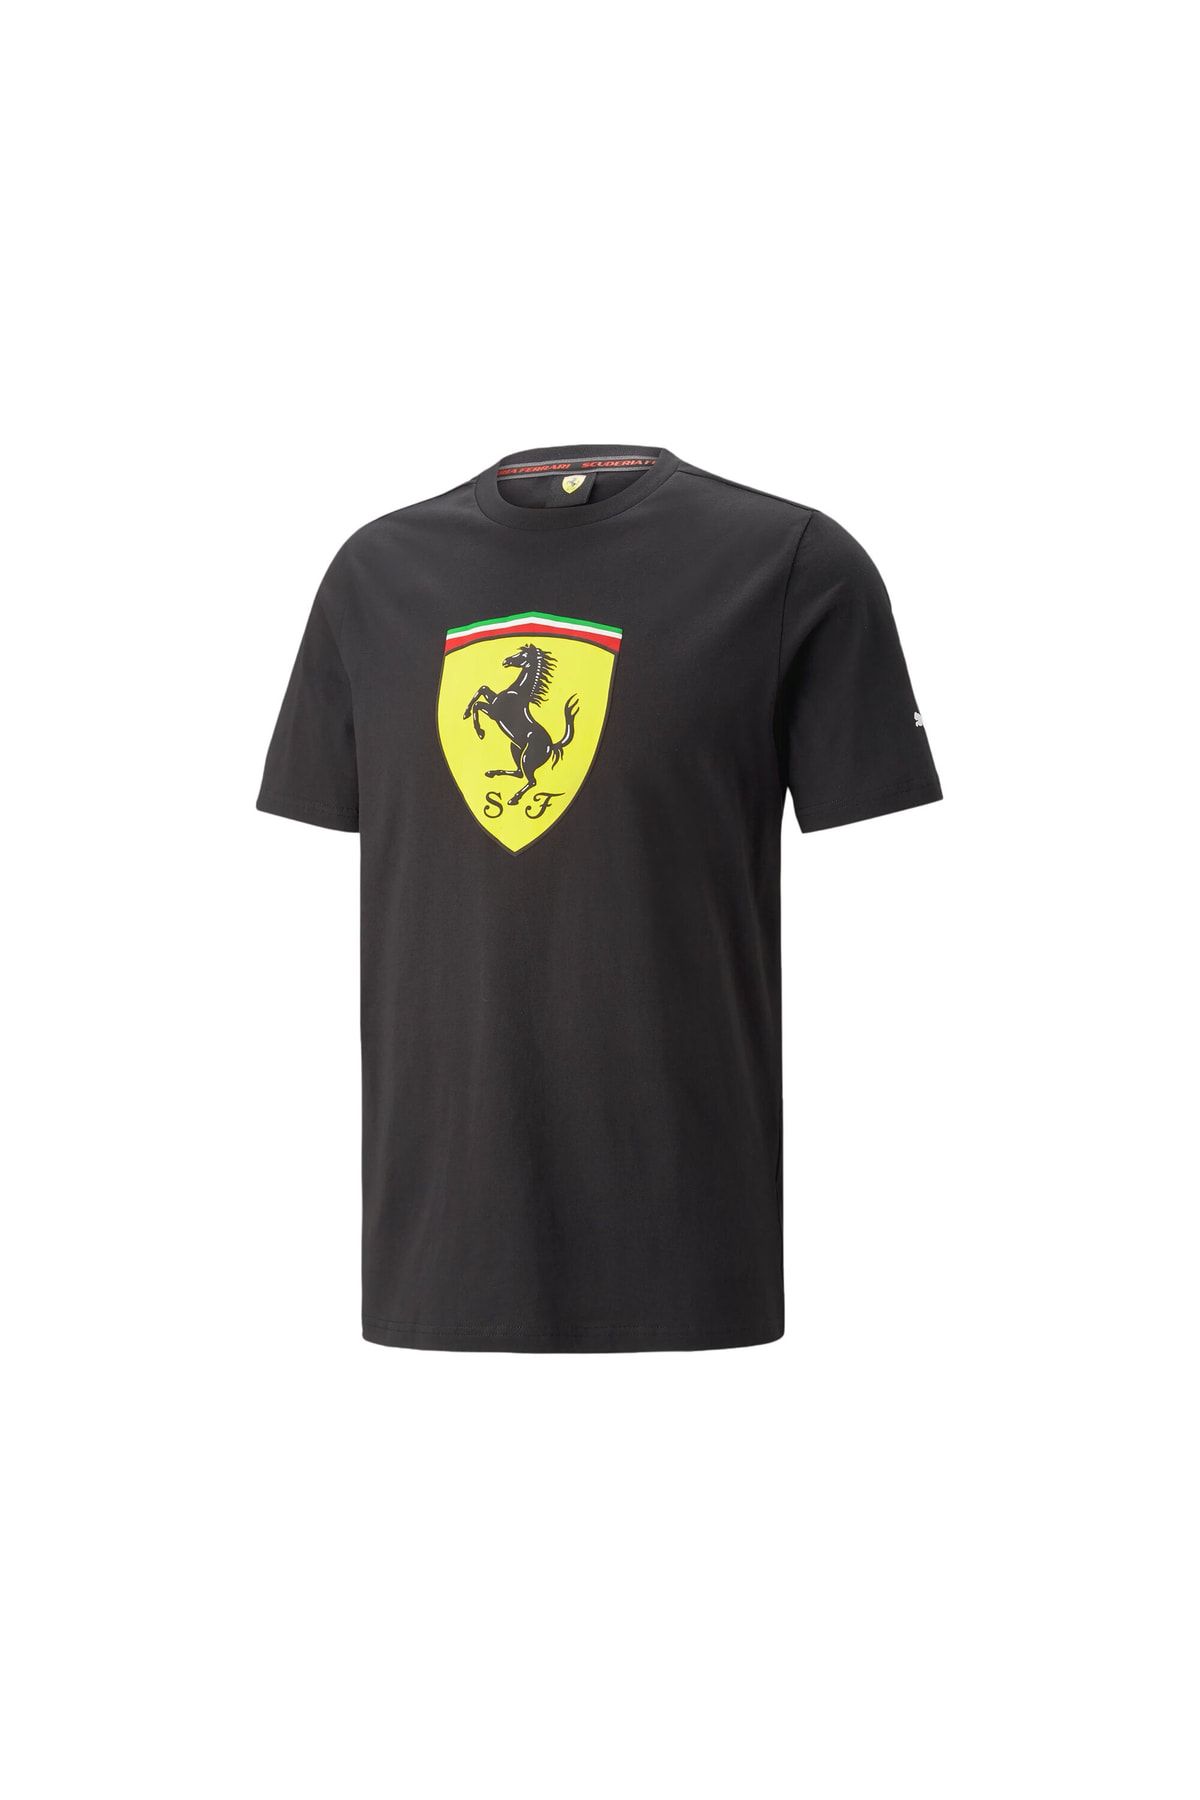 Puma Ferrari Race Big Shield Tee Erkek Günlük Tişört 53817501 Siyah